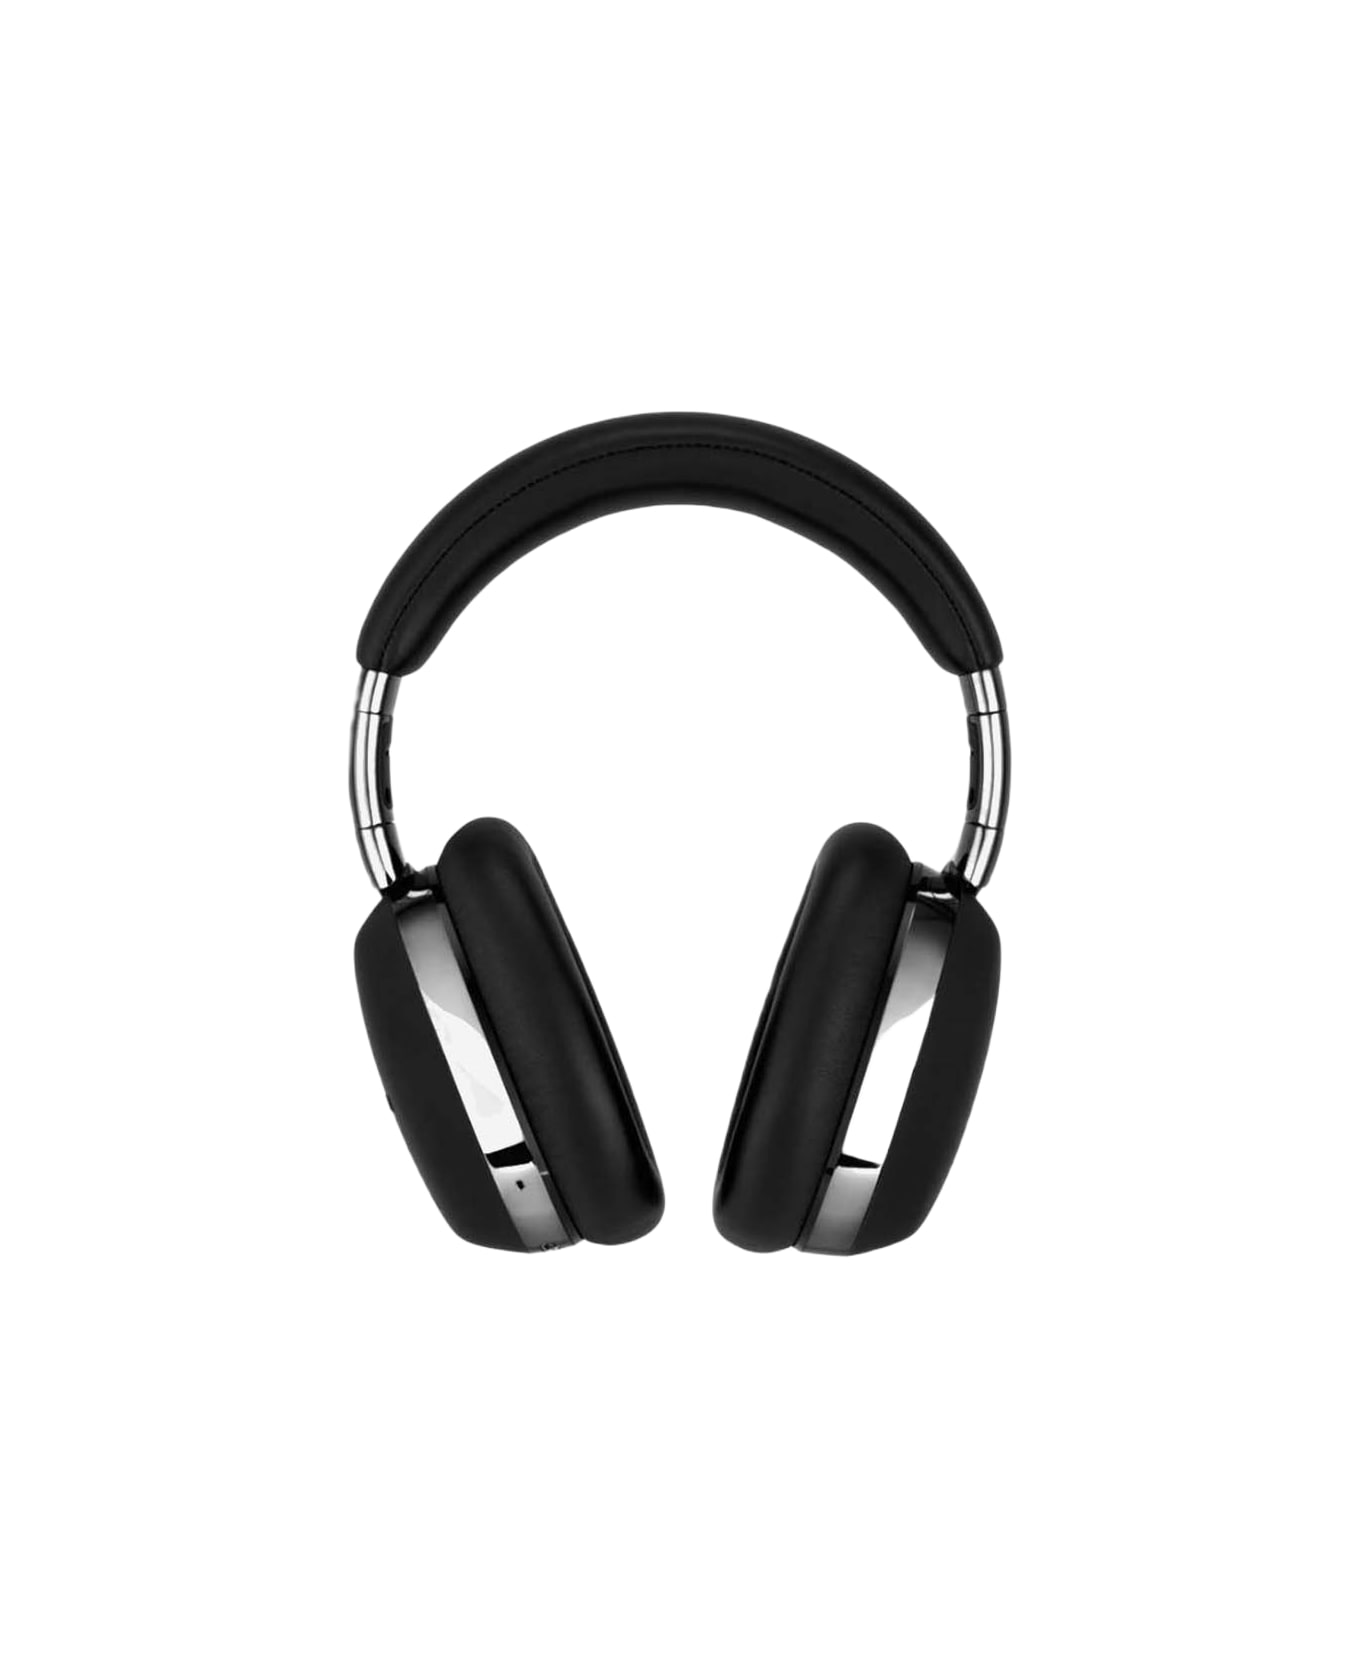 Montblanc Mb 01 Headphones - Black